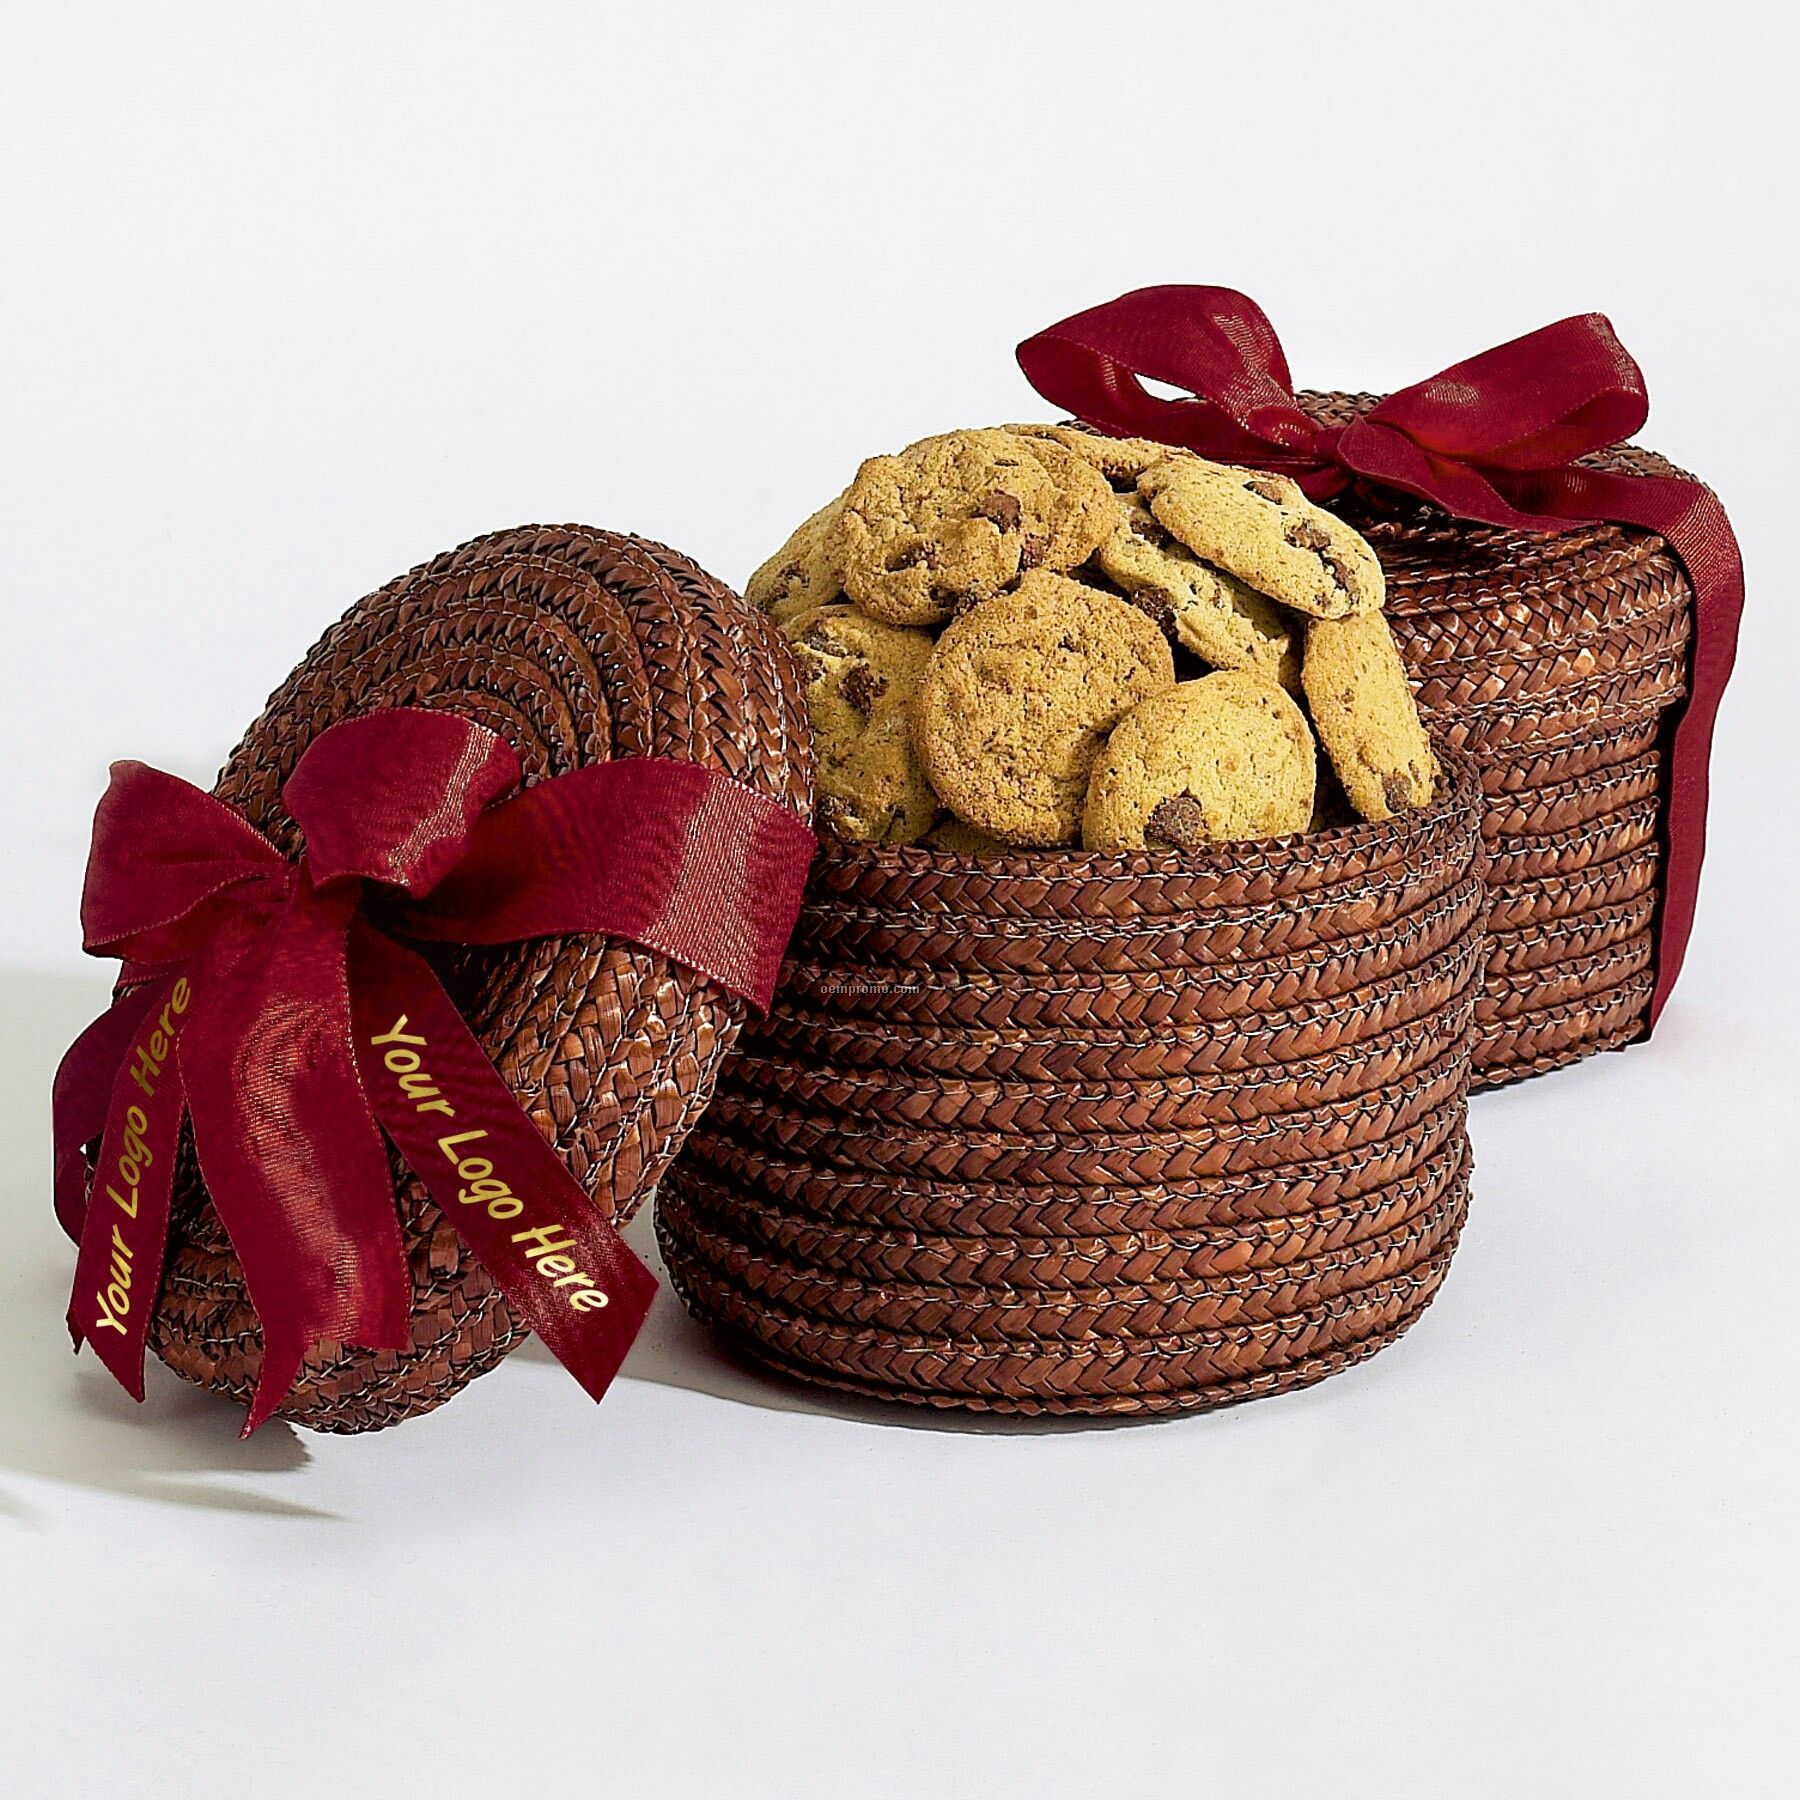 Cookie Lover's Delight Lidded Gift Basket